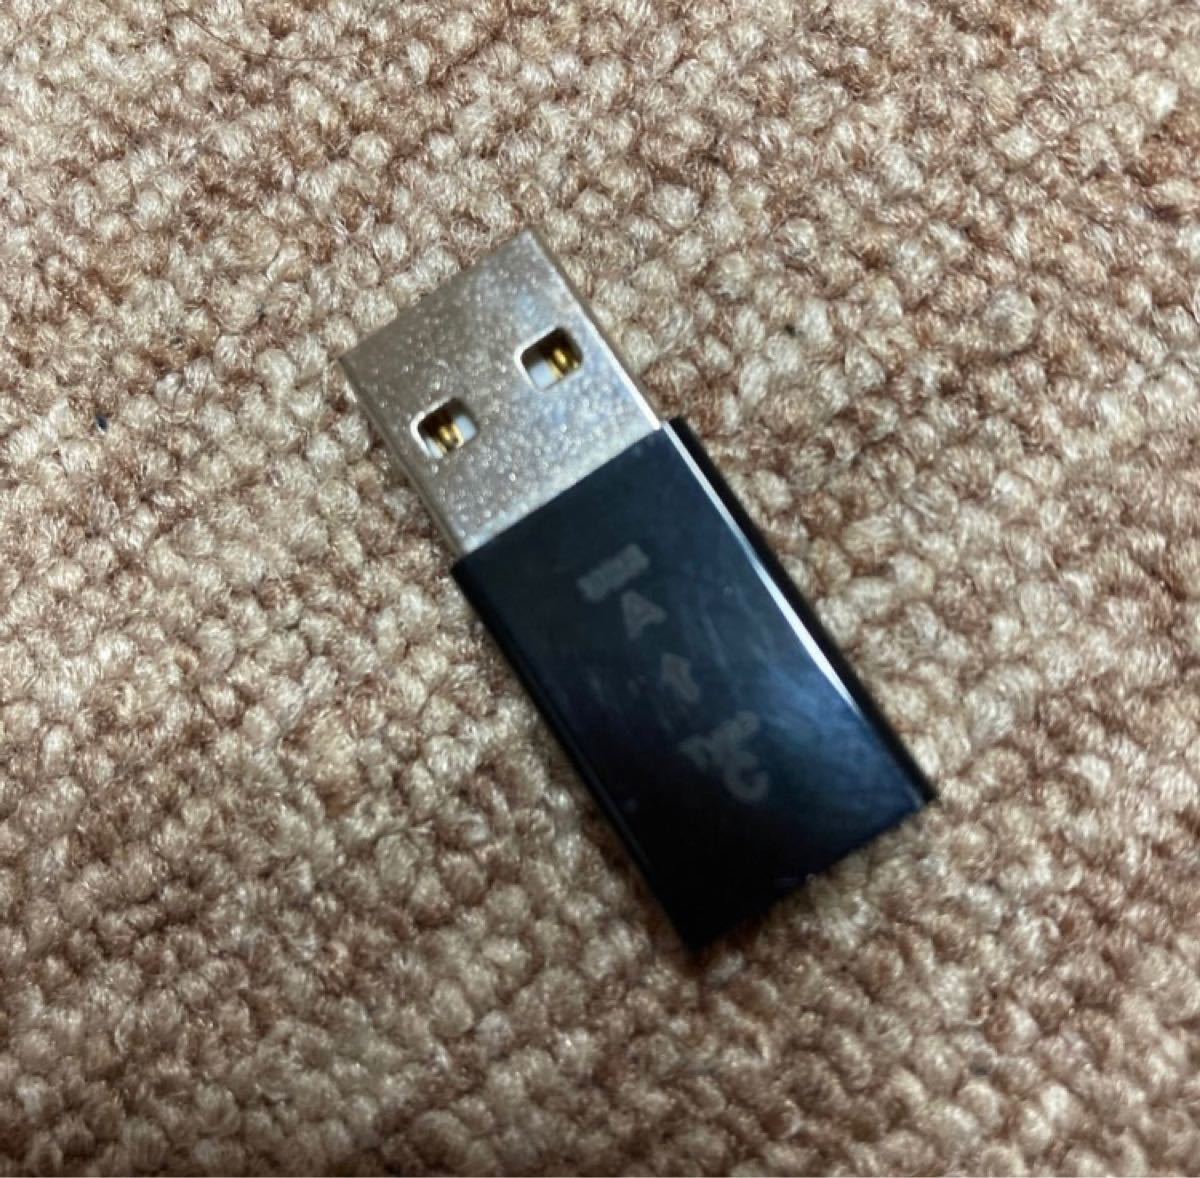 USBタイプC 変換アダプタ タイプC対応 USB タイプC→USB A